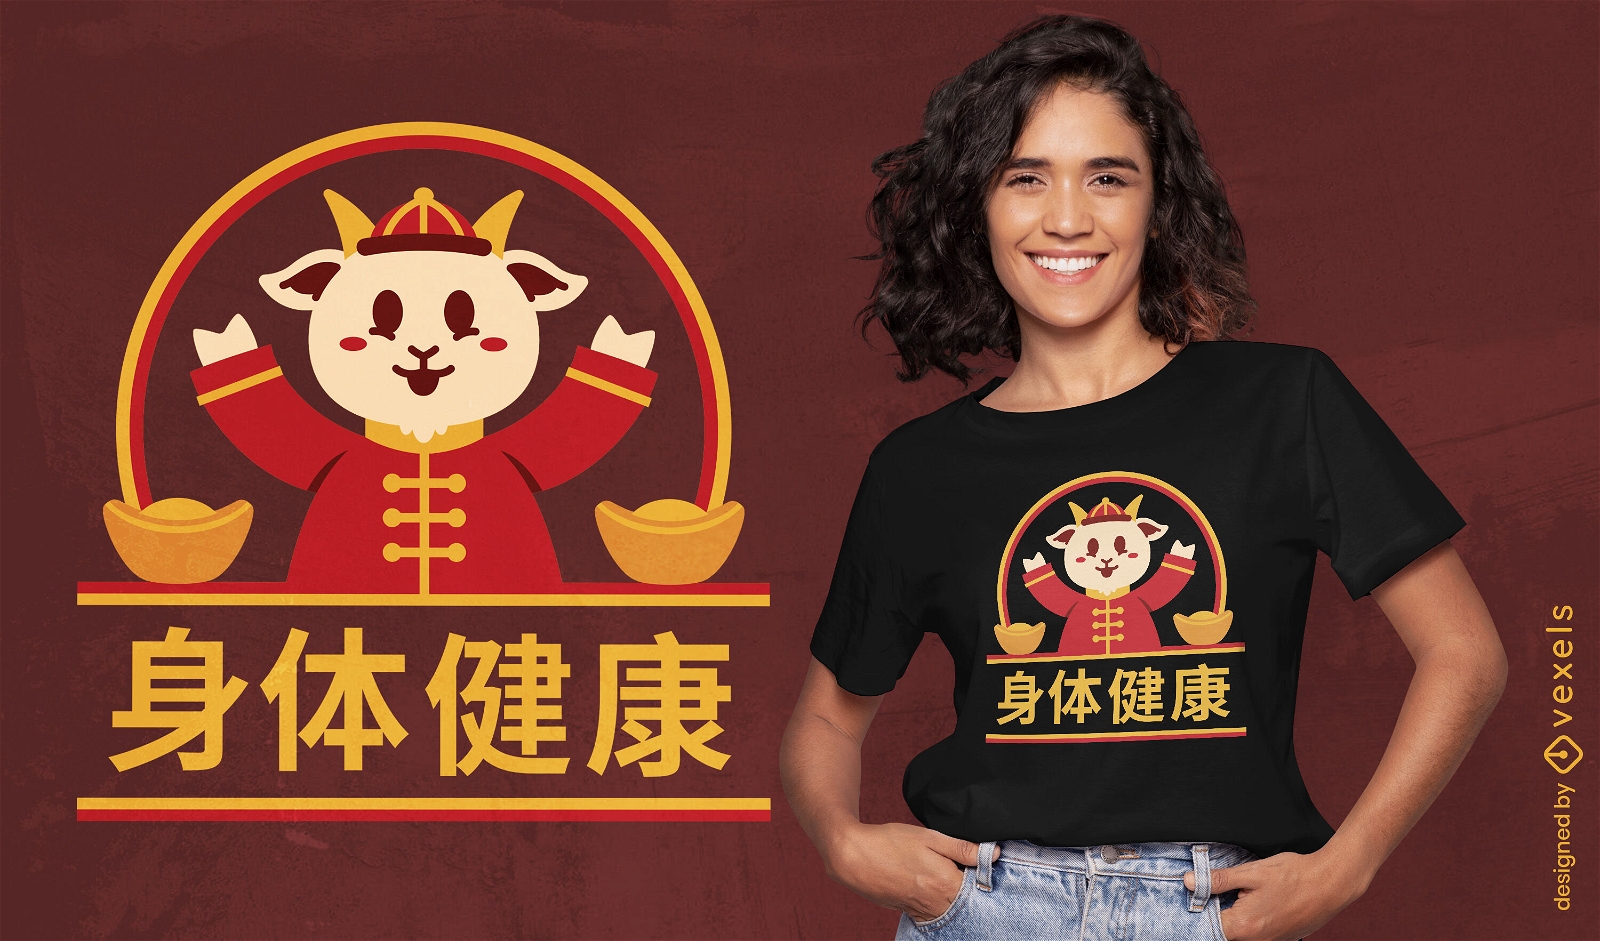 Chinese goat and New Year celebration t-shirt design